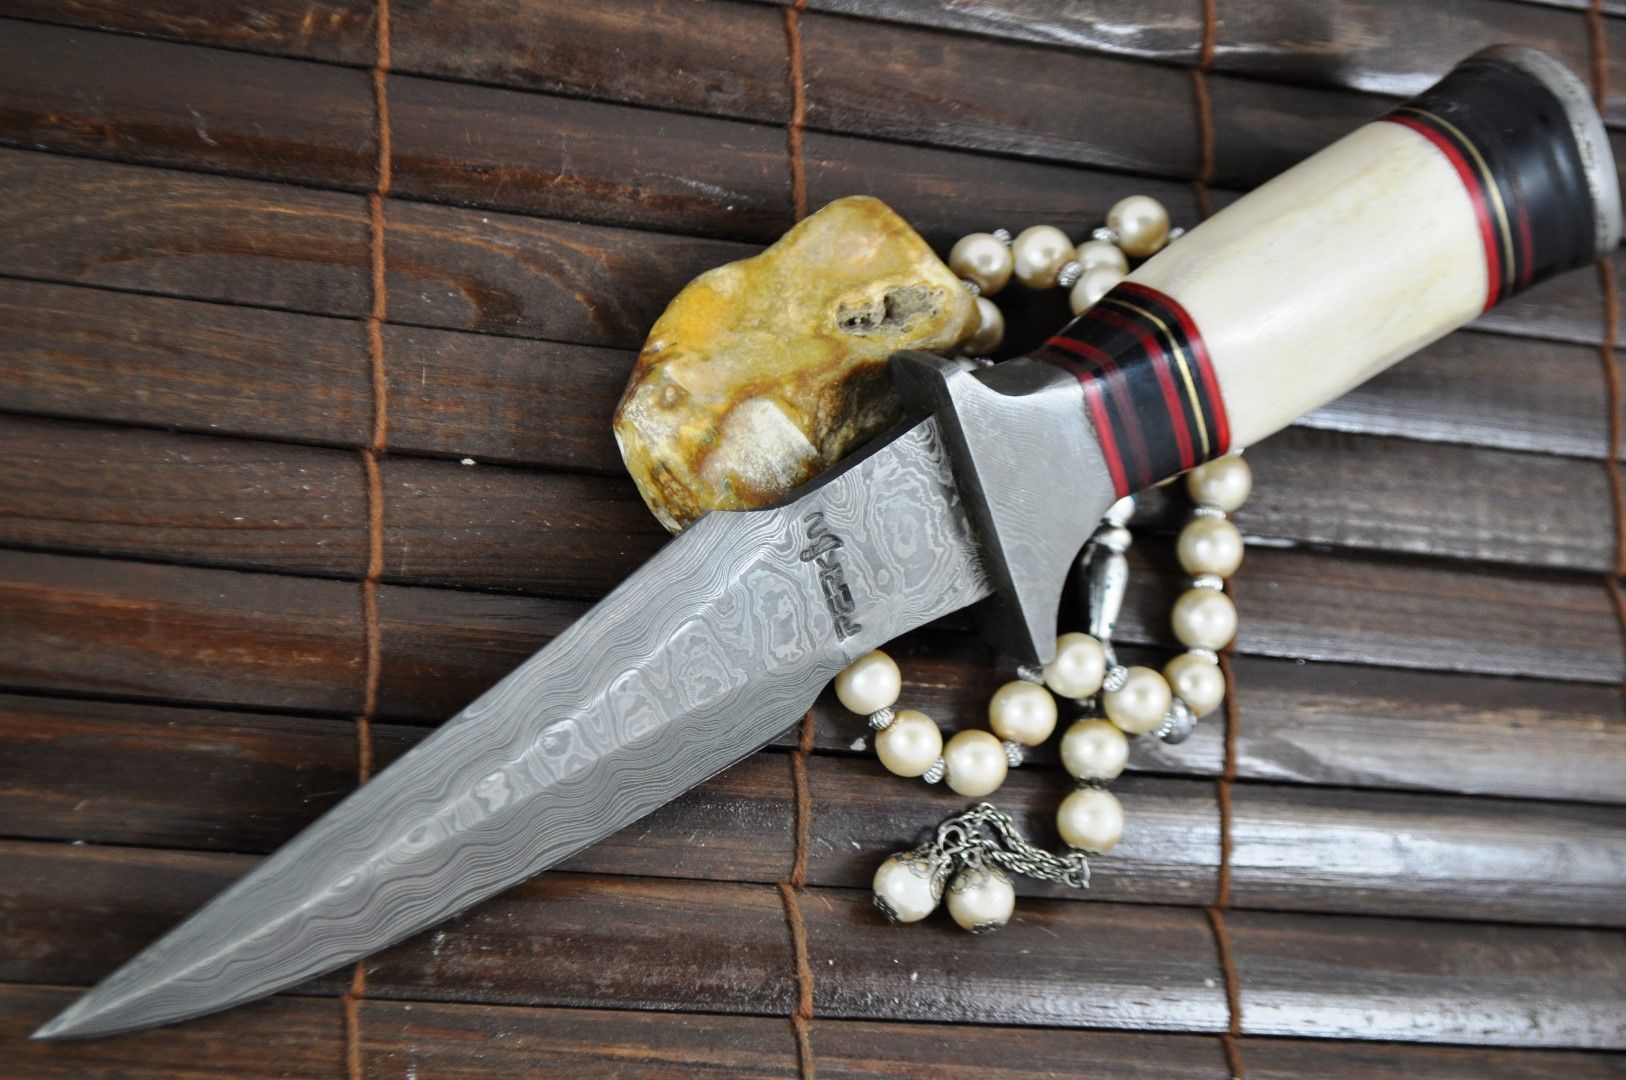 Handmade Damascus Hunting Knife with Bone & Wood Handle